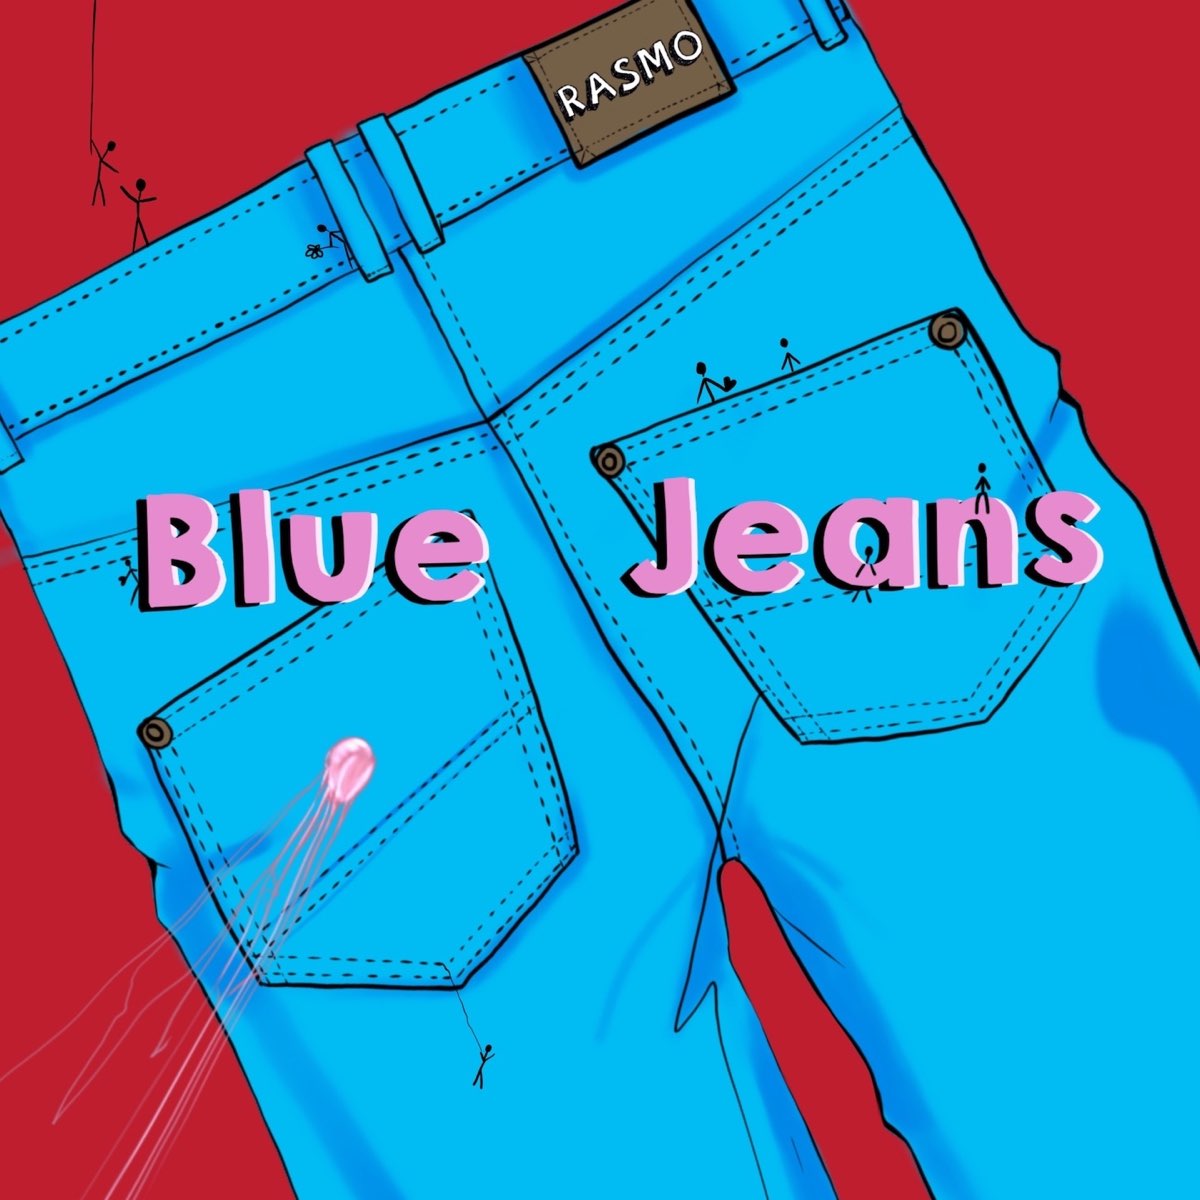 New jeans альбом